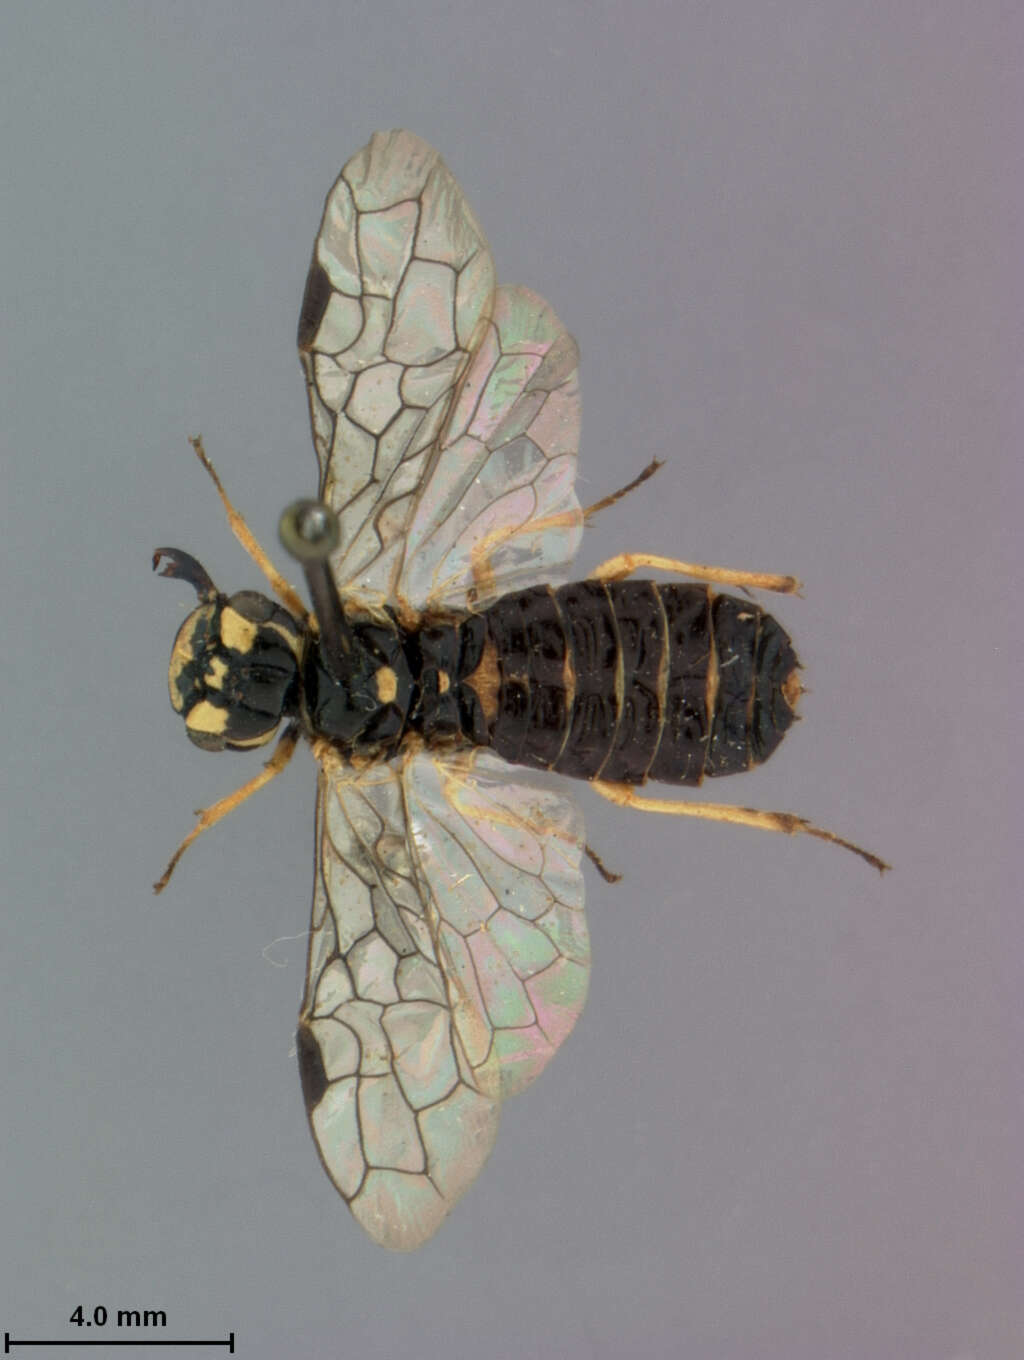 Image of leaf-rolling sawflies